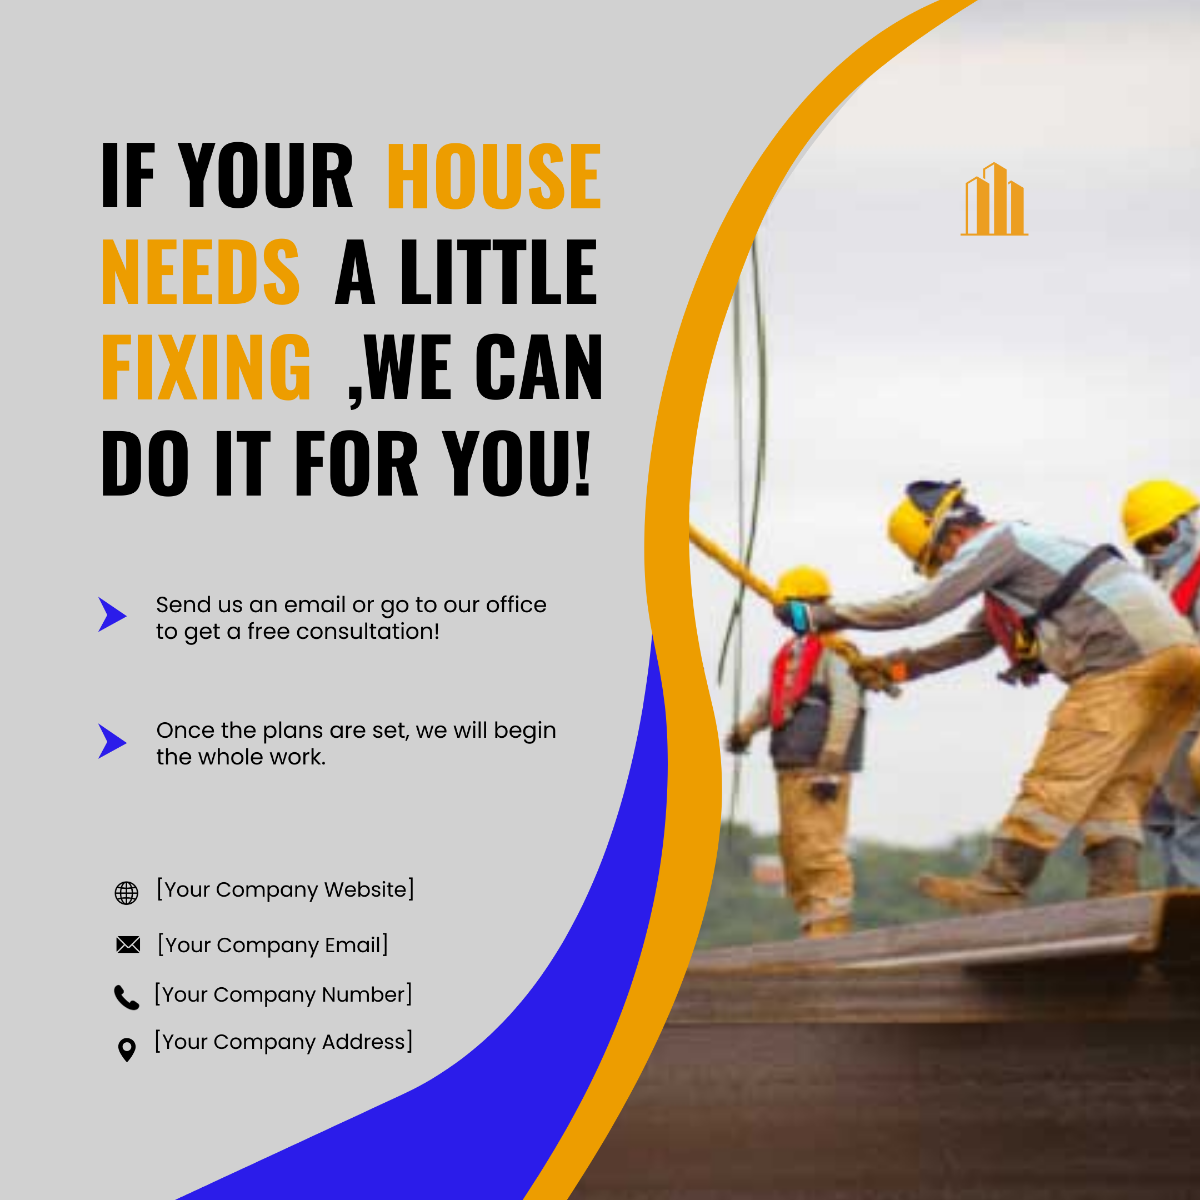 Home Renovation Facebook Ad